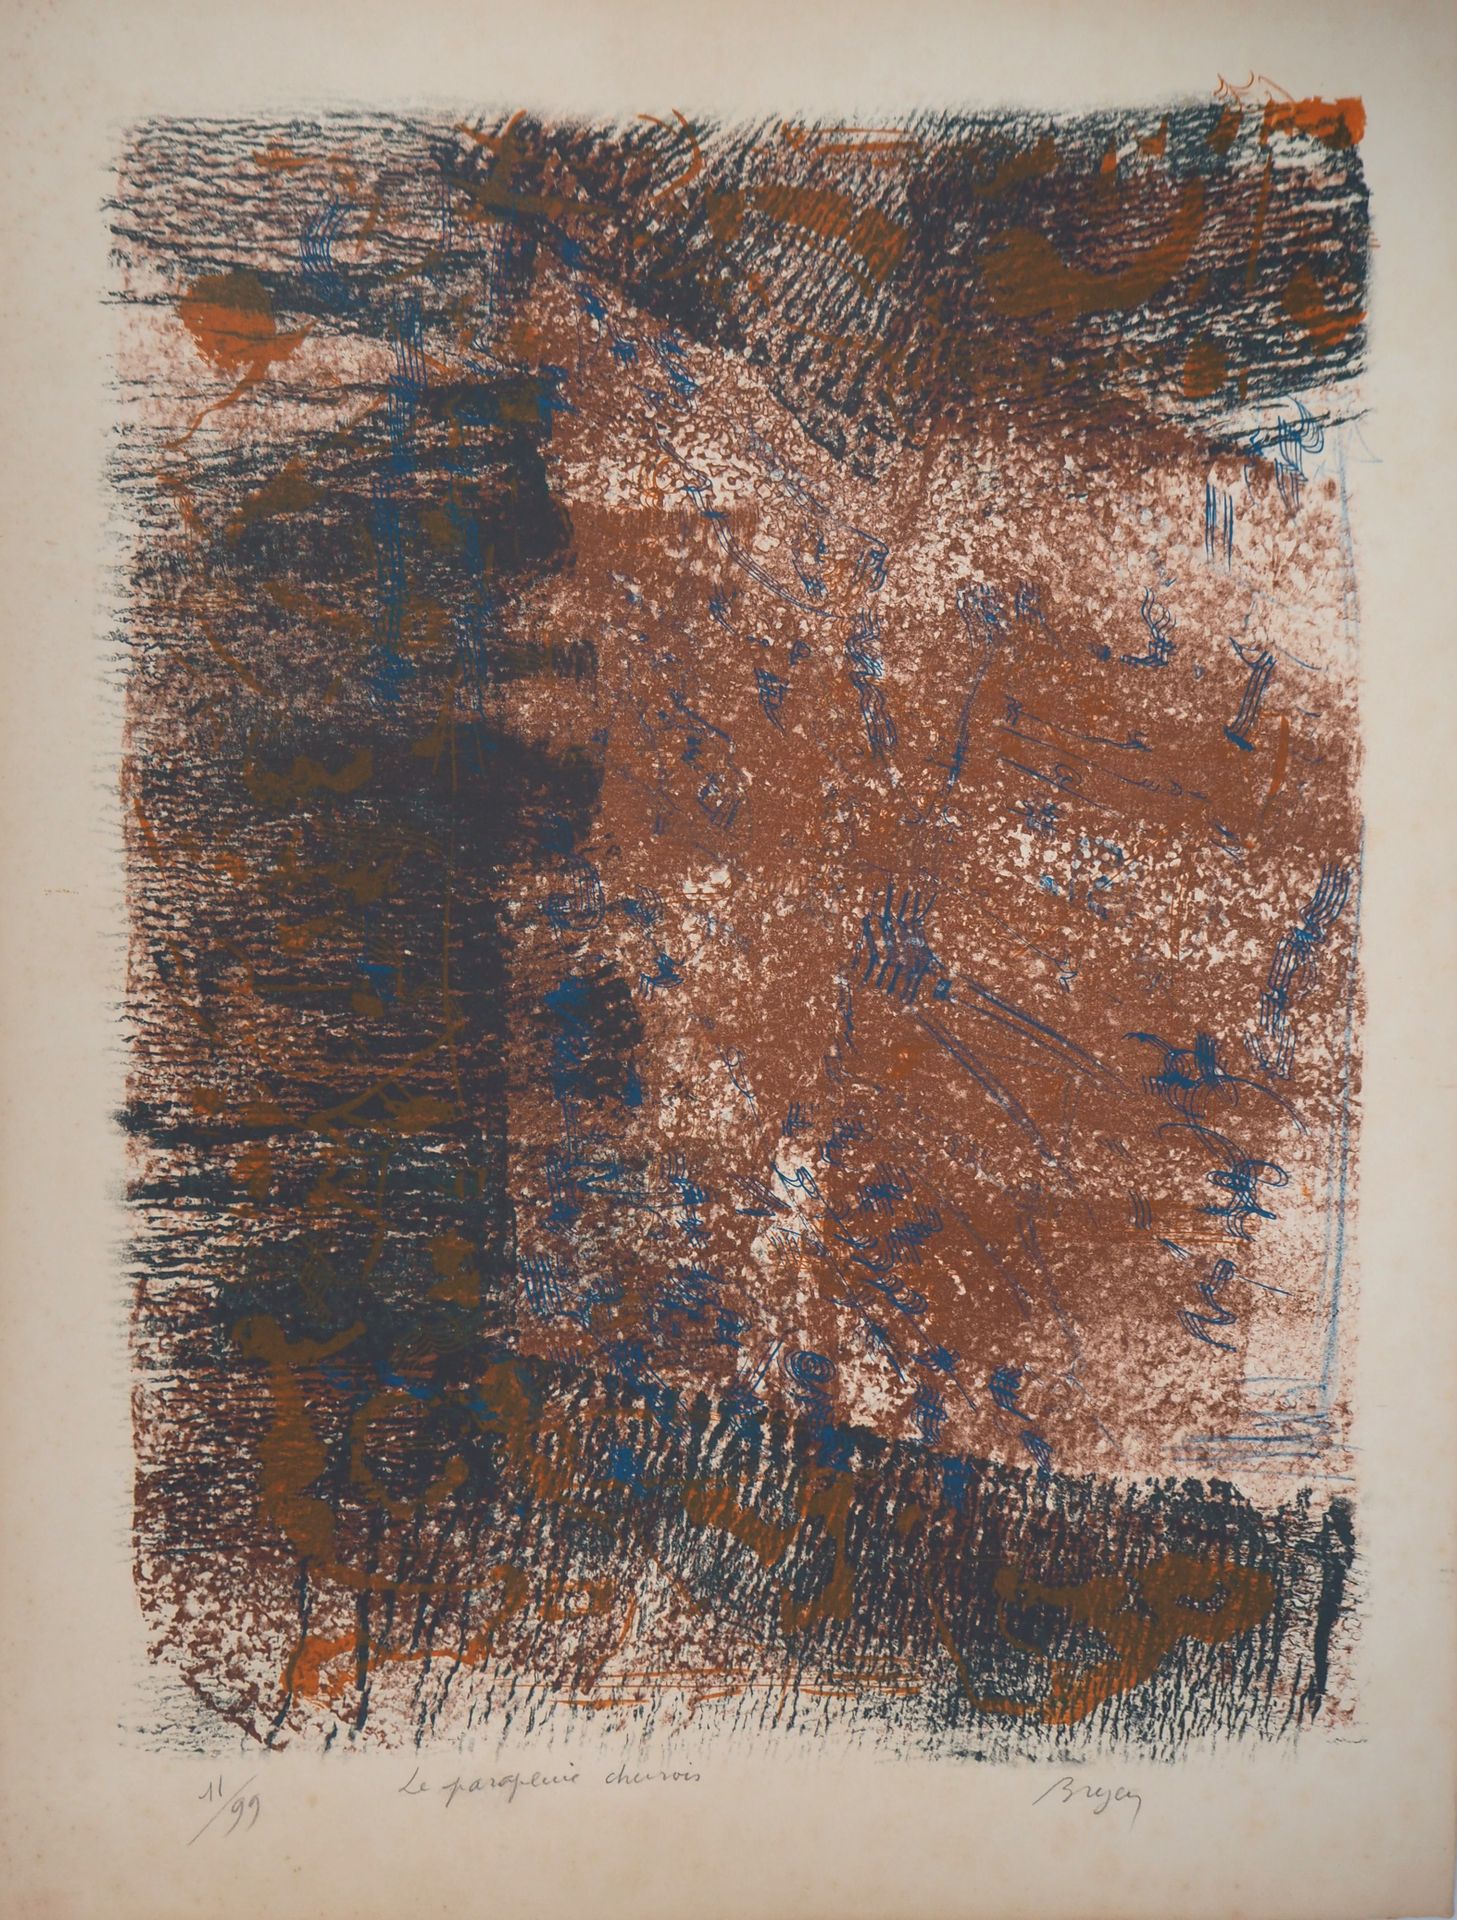 Camille BRYEN 卡米尔-布莱恩(1907-1977)

中国伞，1973年

原始石版画

铅笔签名和标题，艺术家的手。

牛皮纸上 55 x 49&hellip;